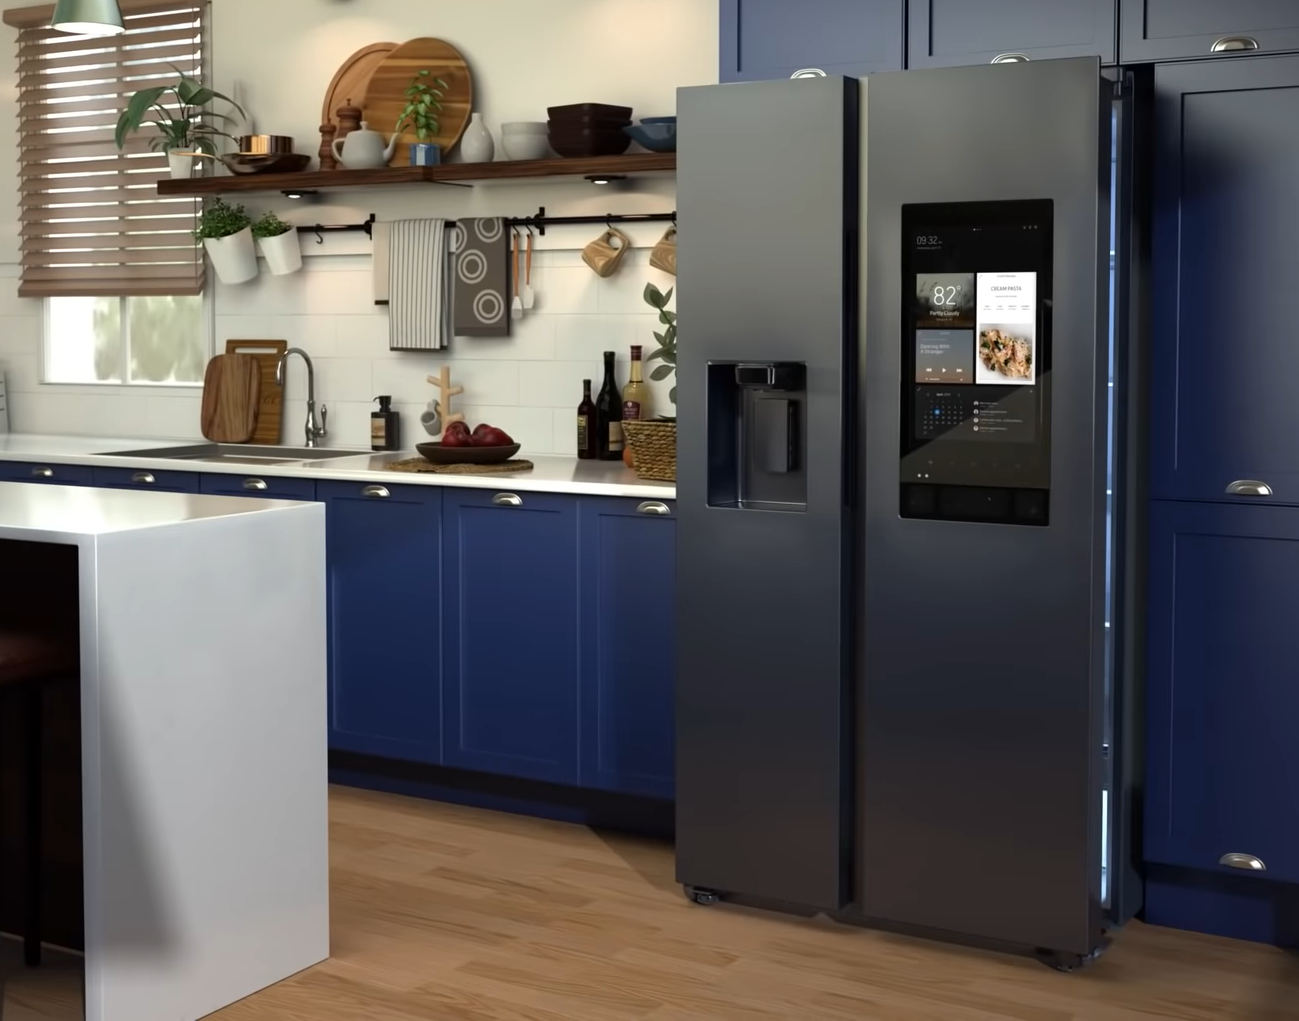 Refrigerator - Samsung Family Hub